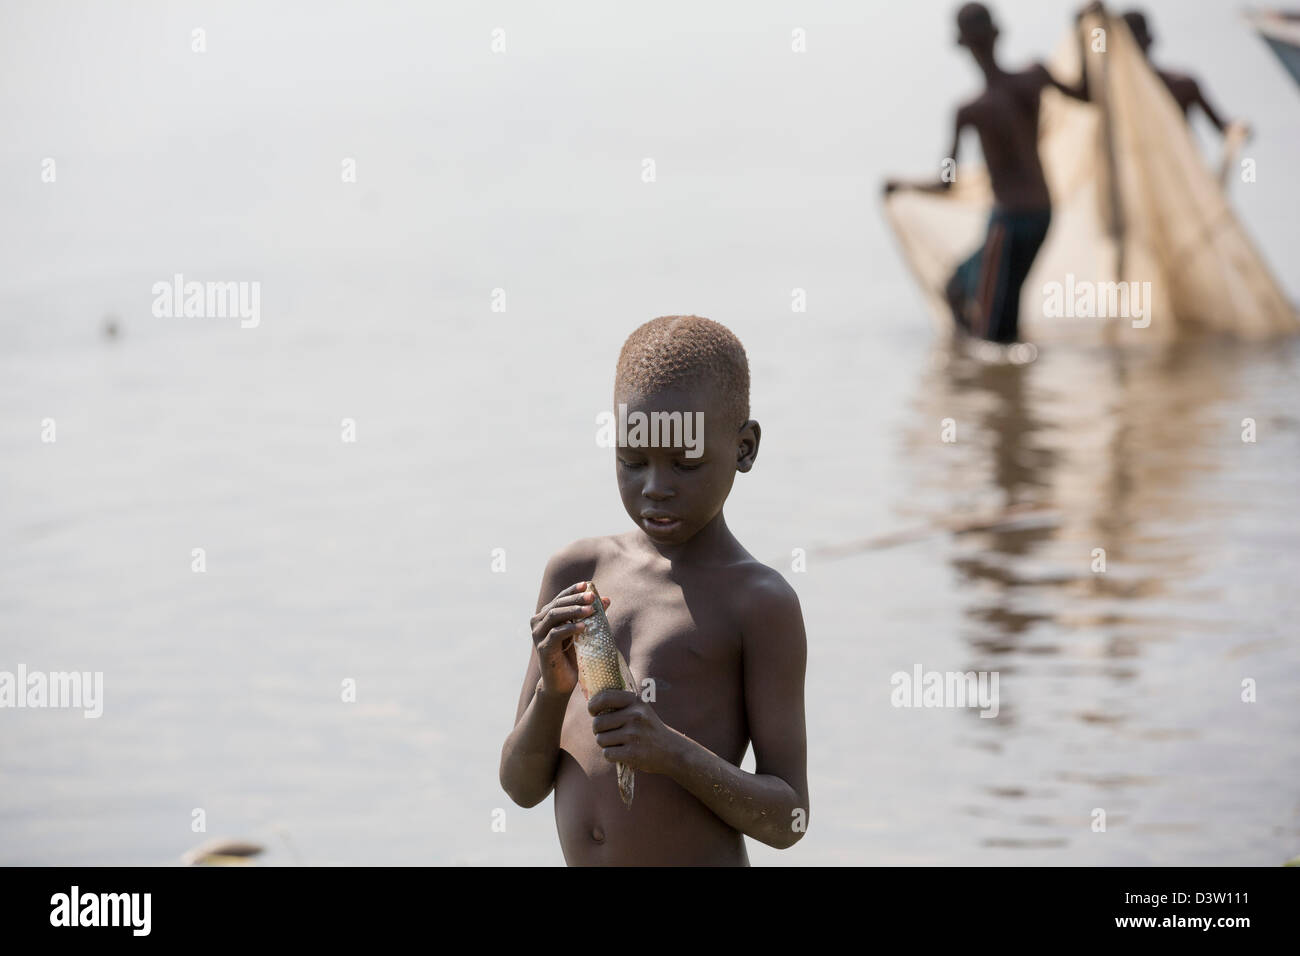 BOR, Süd-SUDAN, 19. November 2012: Alltag auf dem Port auf dem Nil an Bor Foto von Mike Goldwater Stockfoto